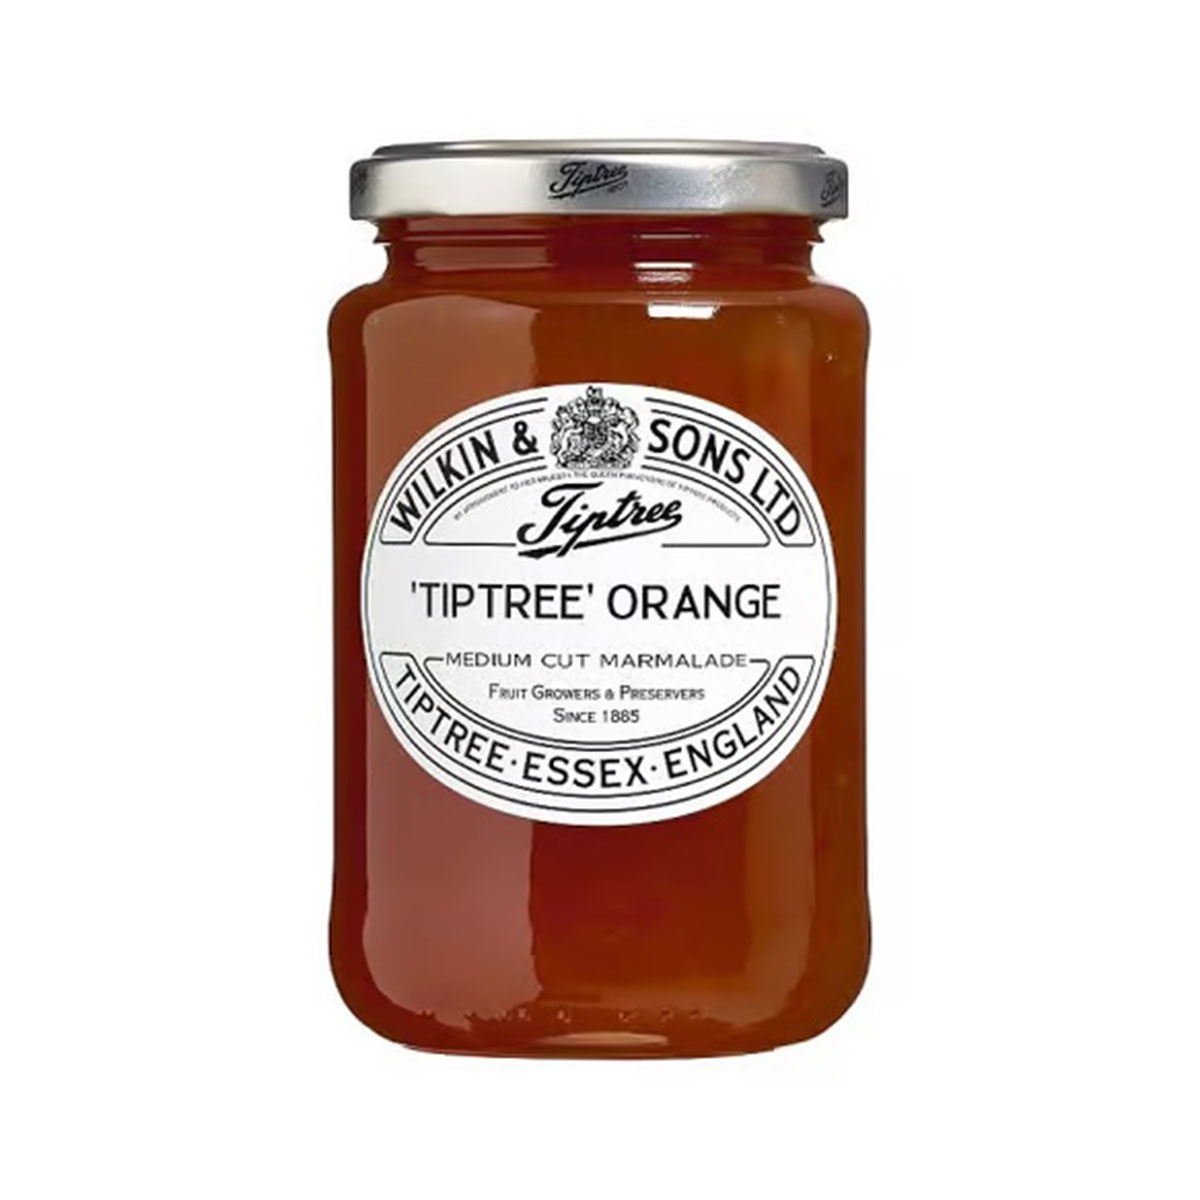 Tiptree Orange Marmalade 340g